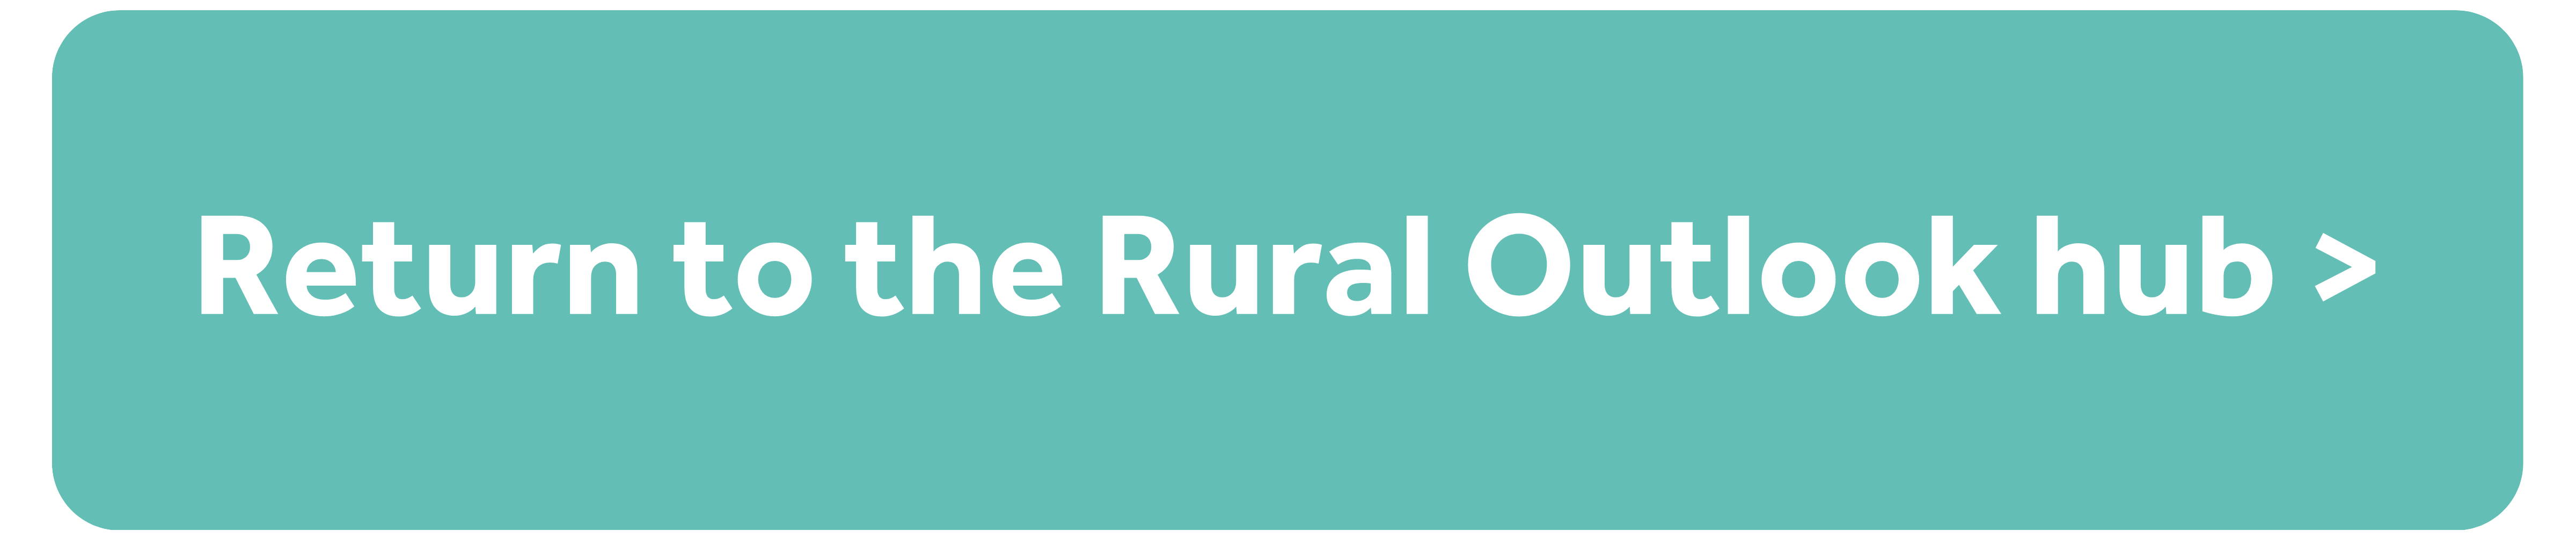 Return to the Rural Outlook hub .png